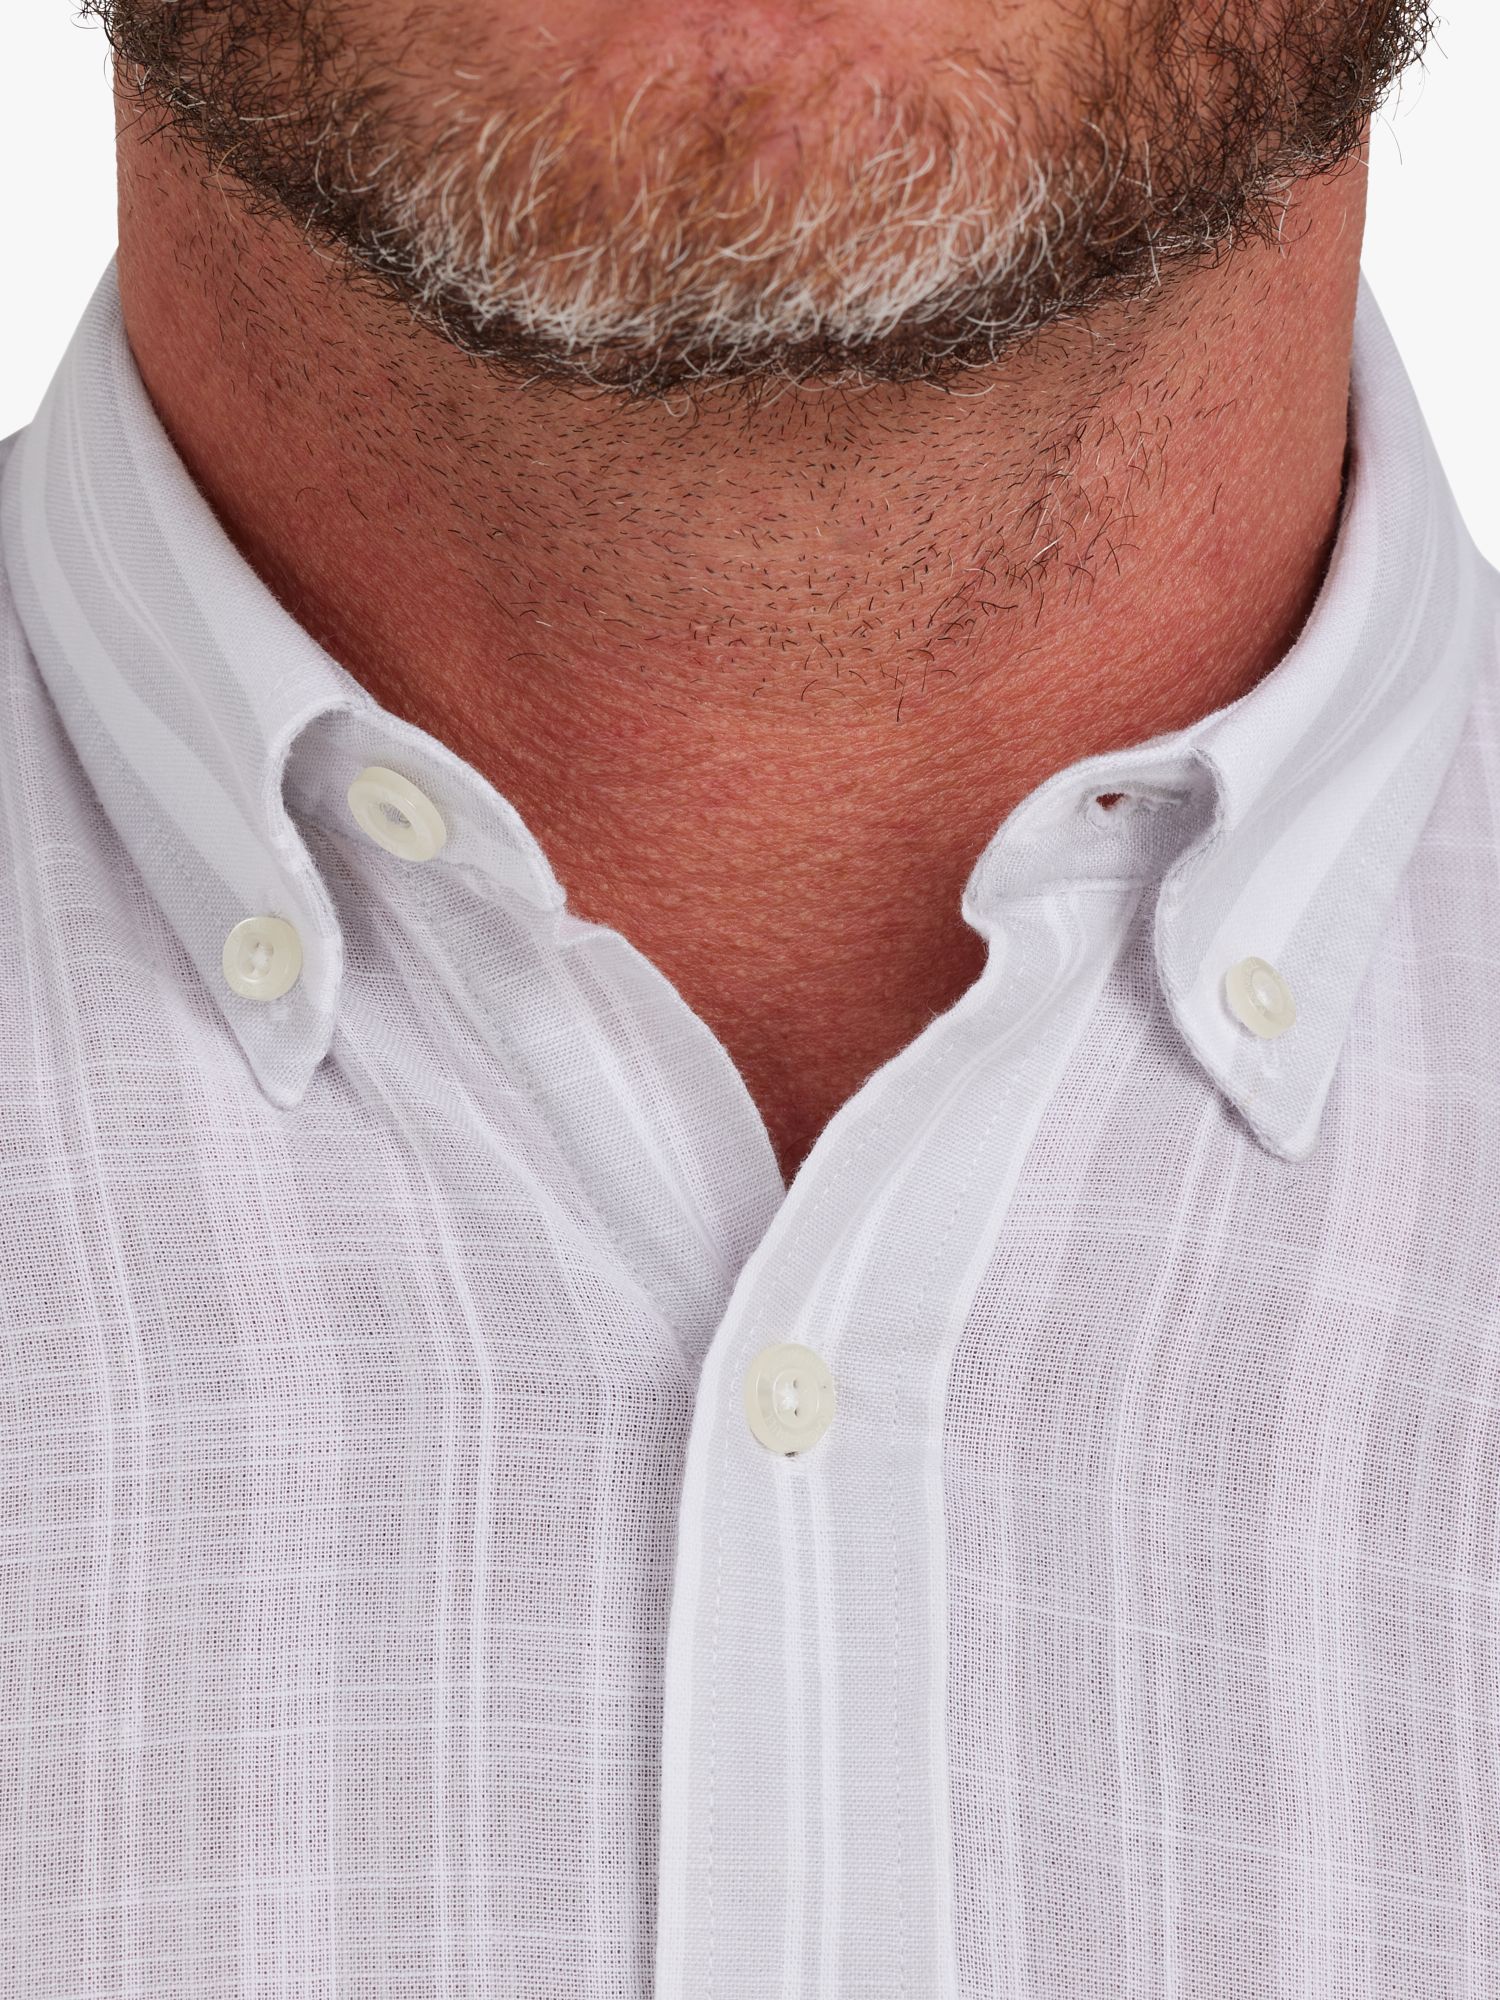 Buy Raging Bull Short Sleeve Multi Stripe Linen Look Shirt, Grey Online at johnlewis.com